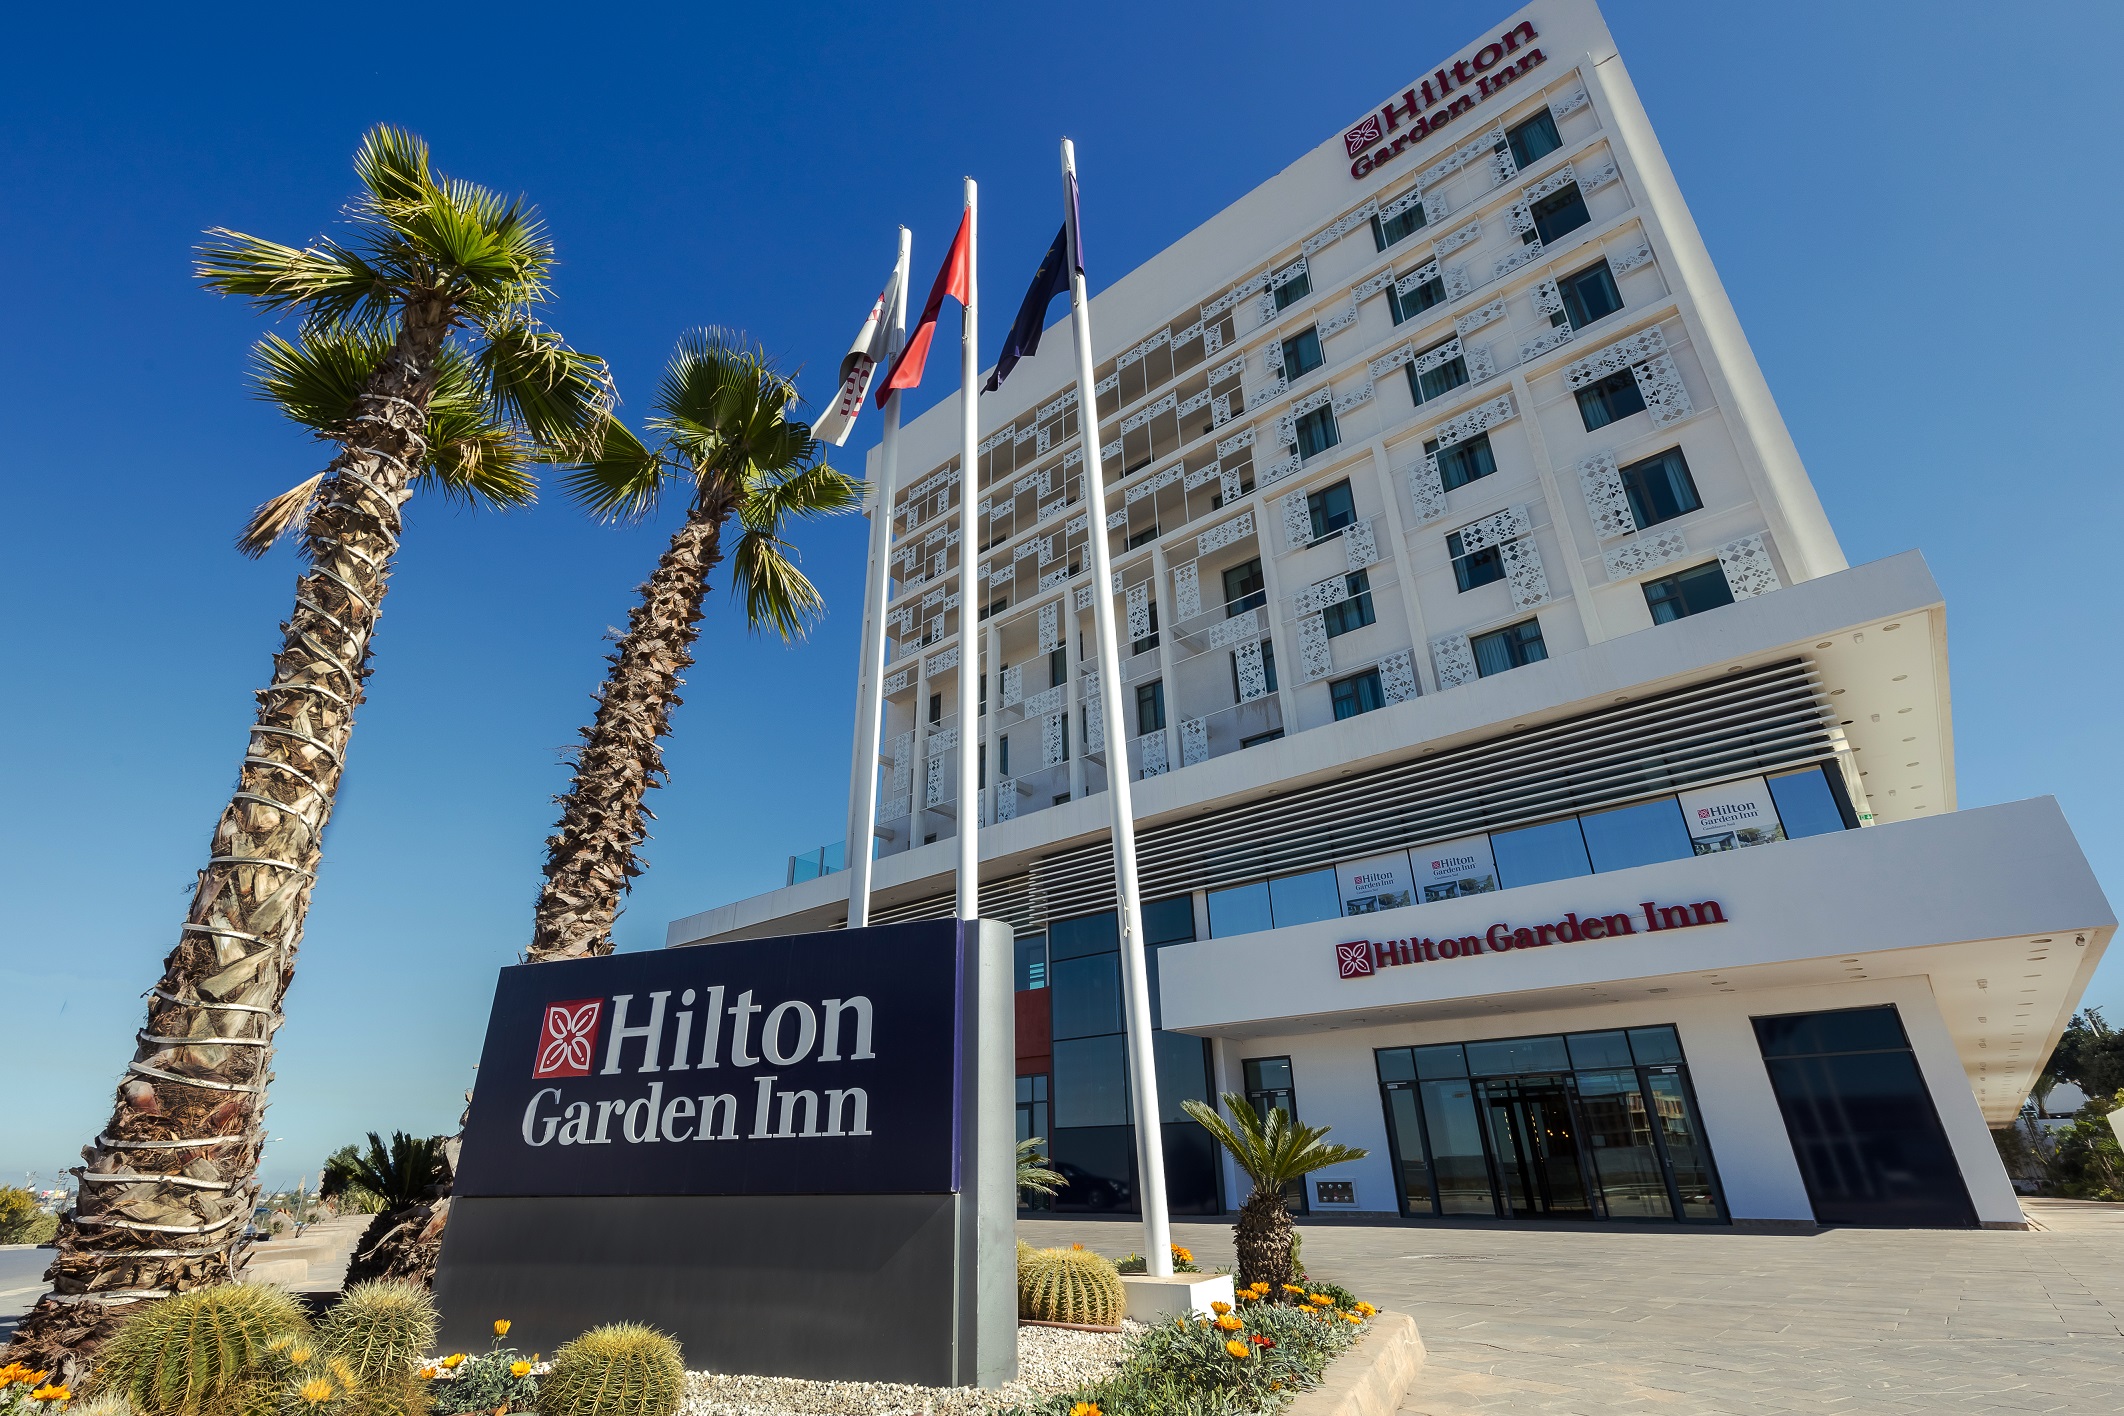 Inauguration du Hilton Garden Inn Casablanca